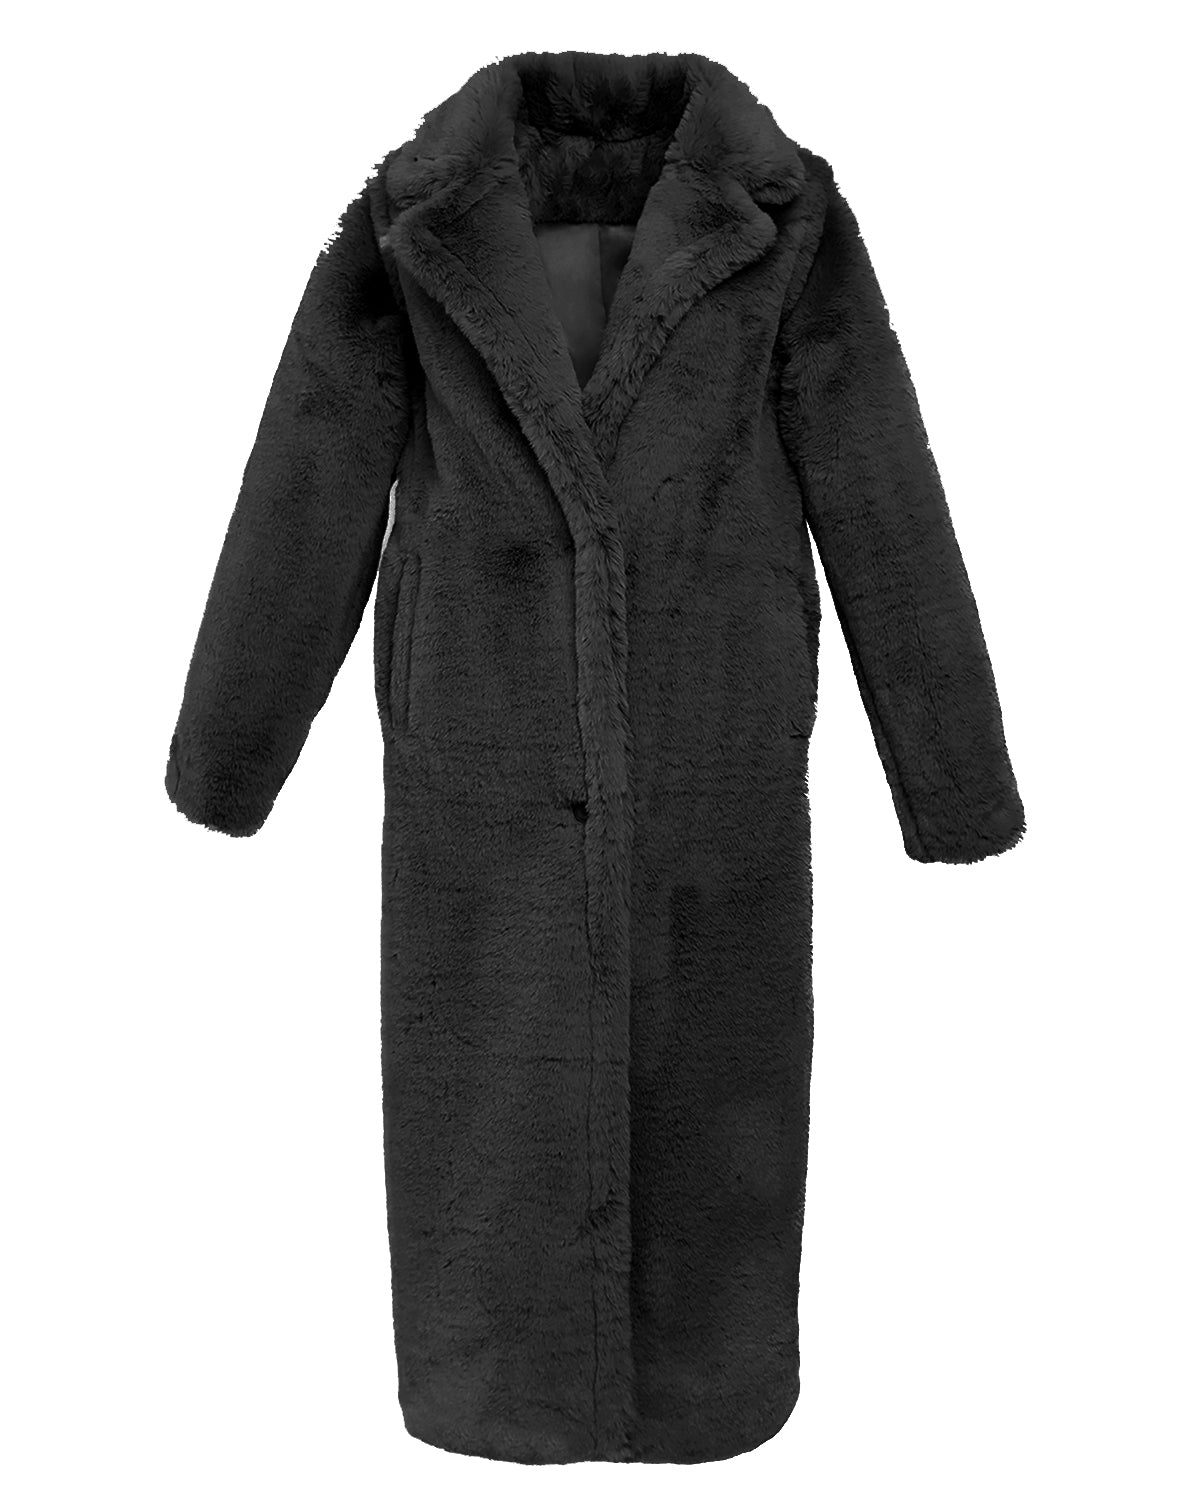 Long Black Teddy Coat